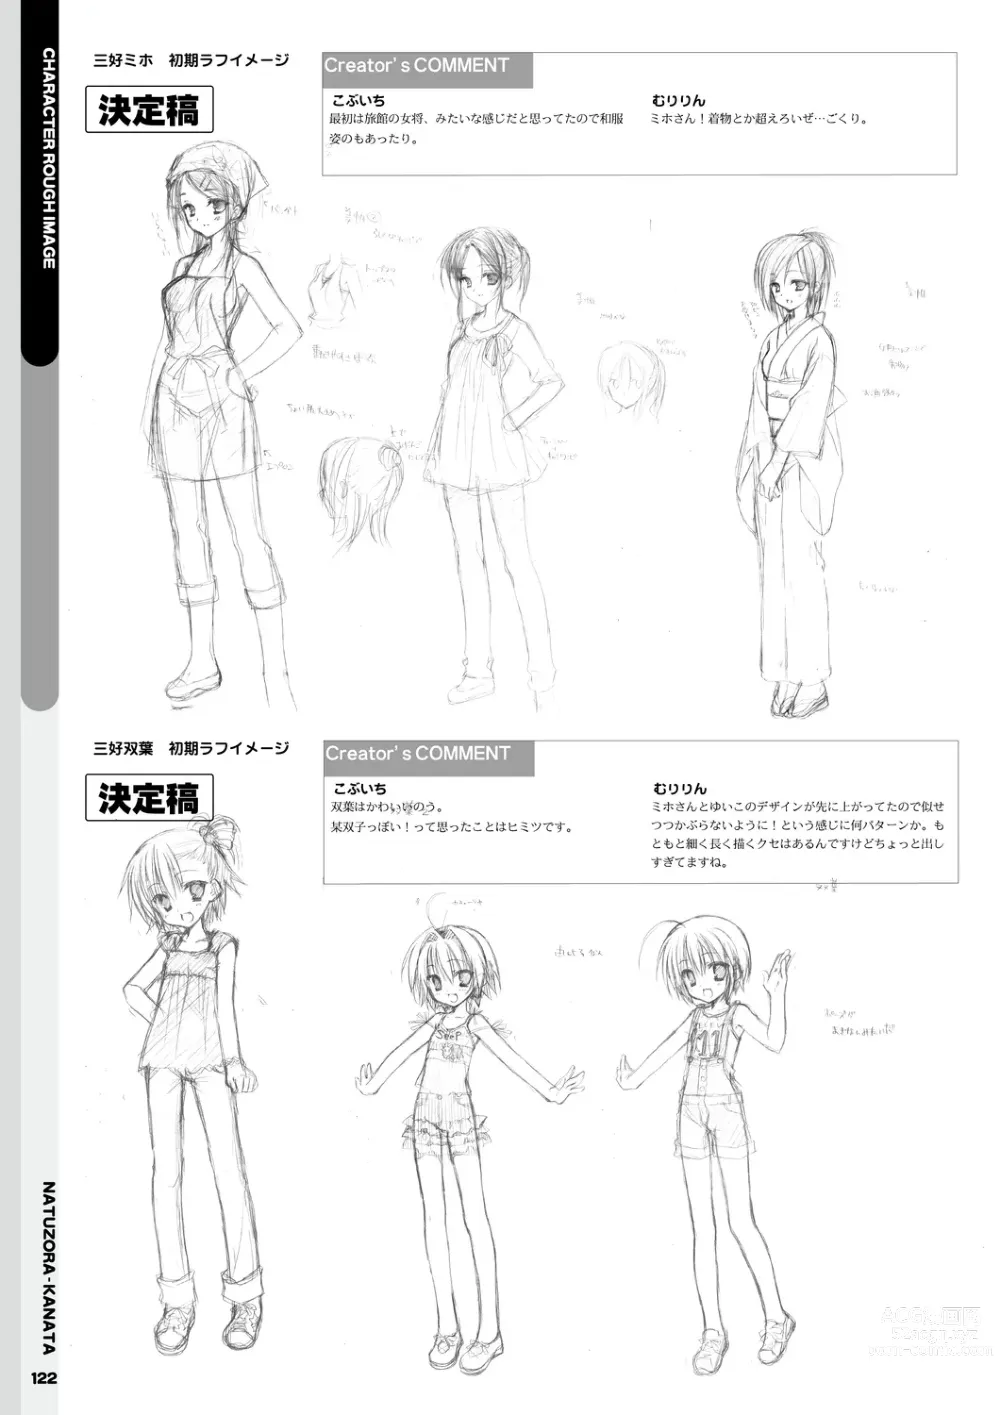 Page 124 of manga Natsuzora Kanata Official Visual Fan Book